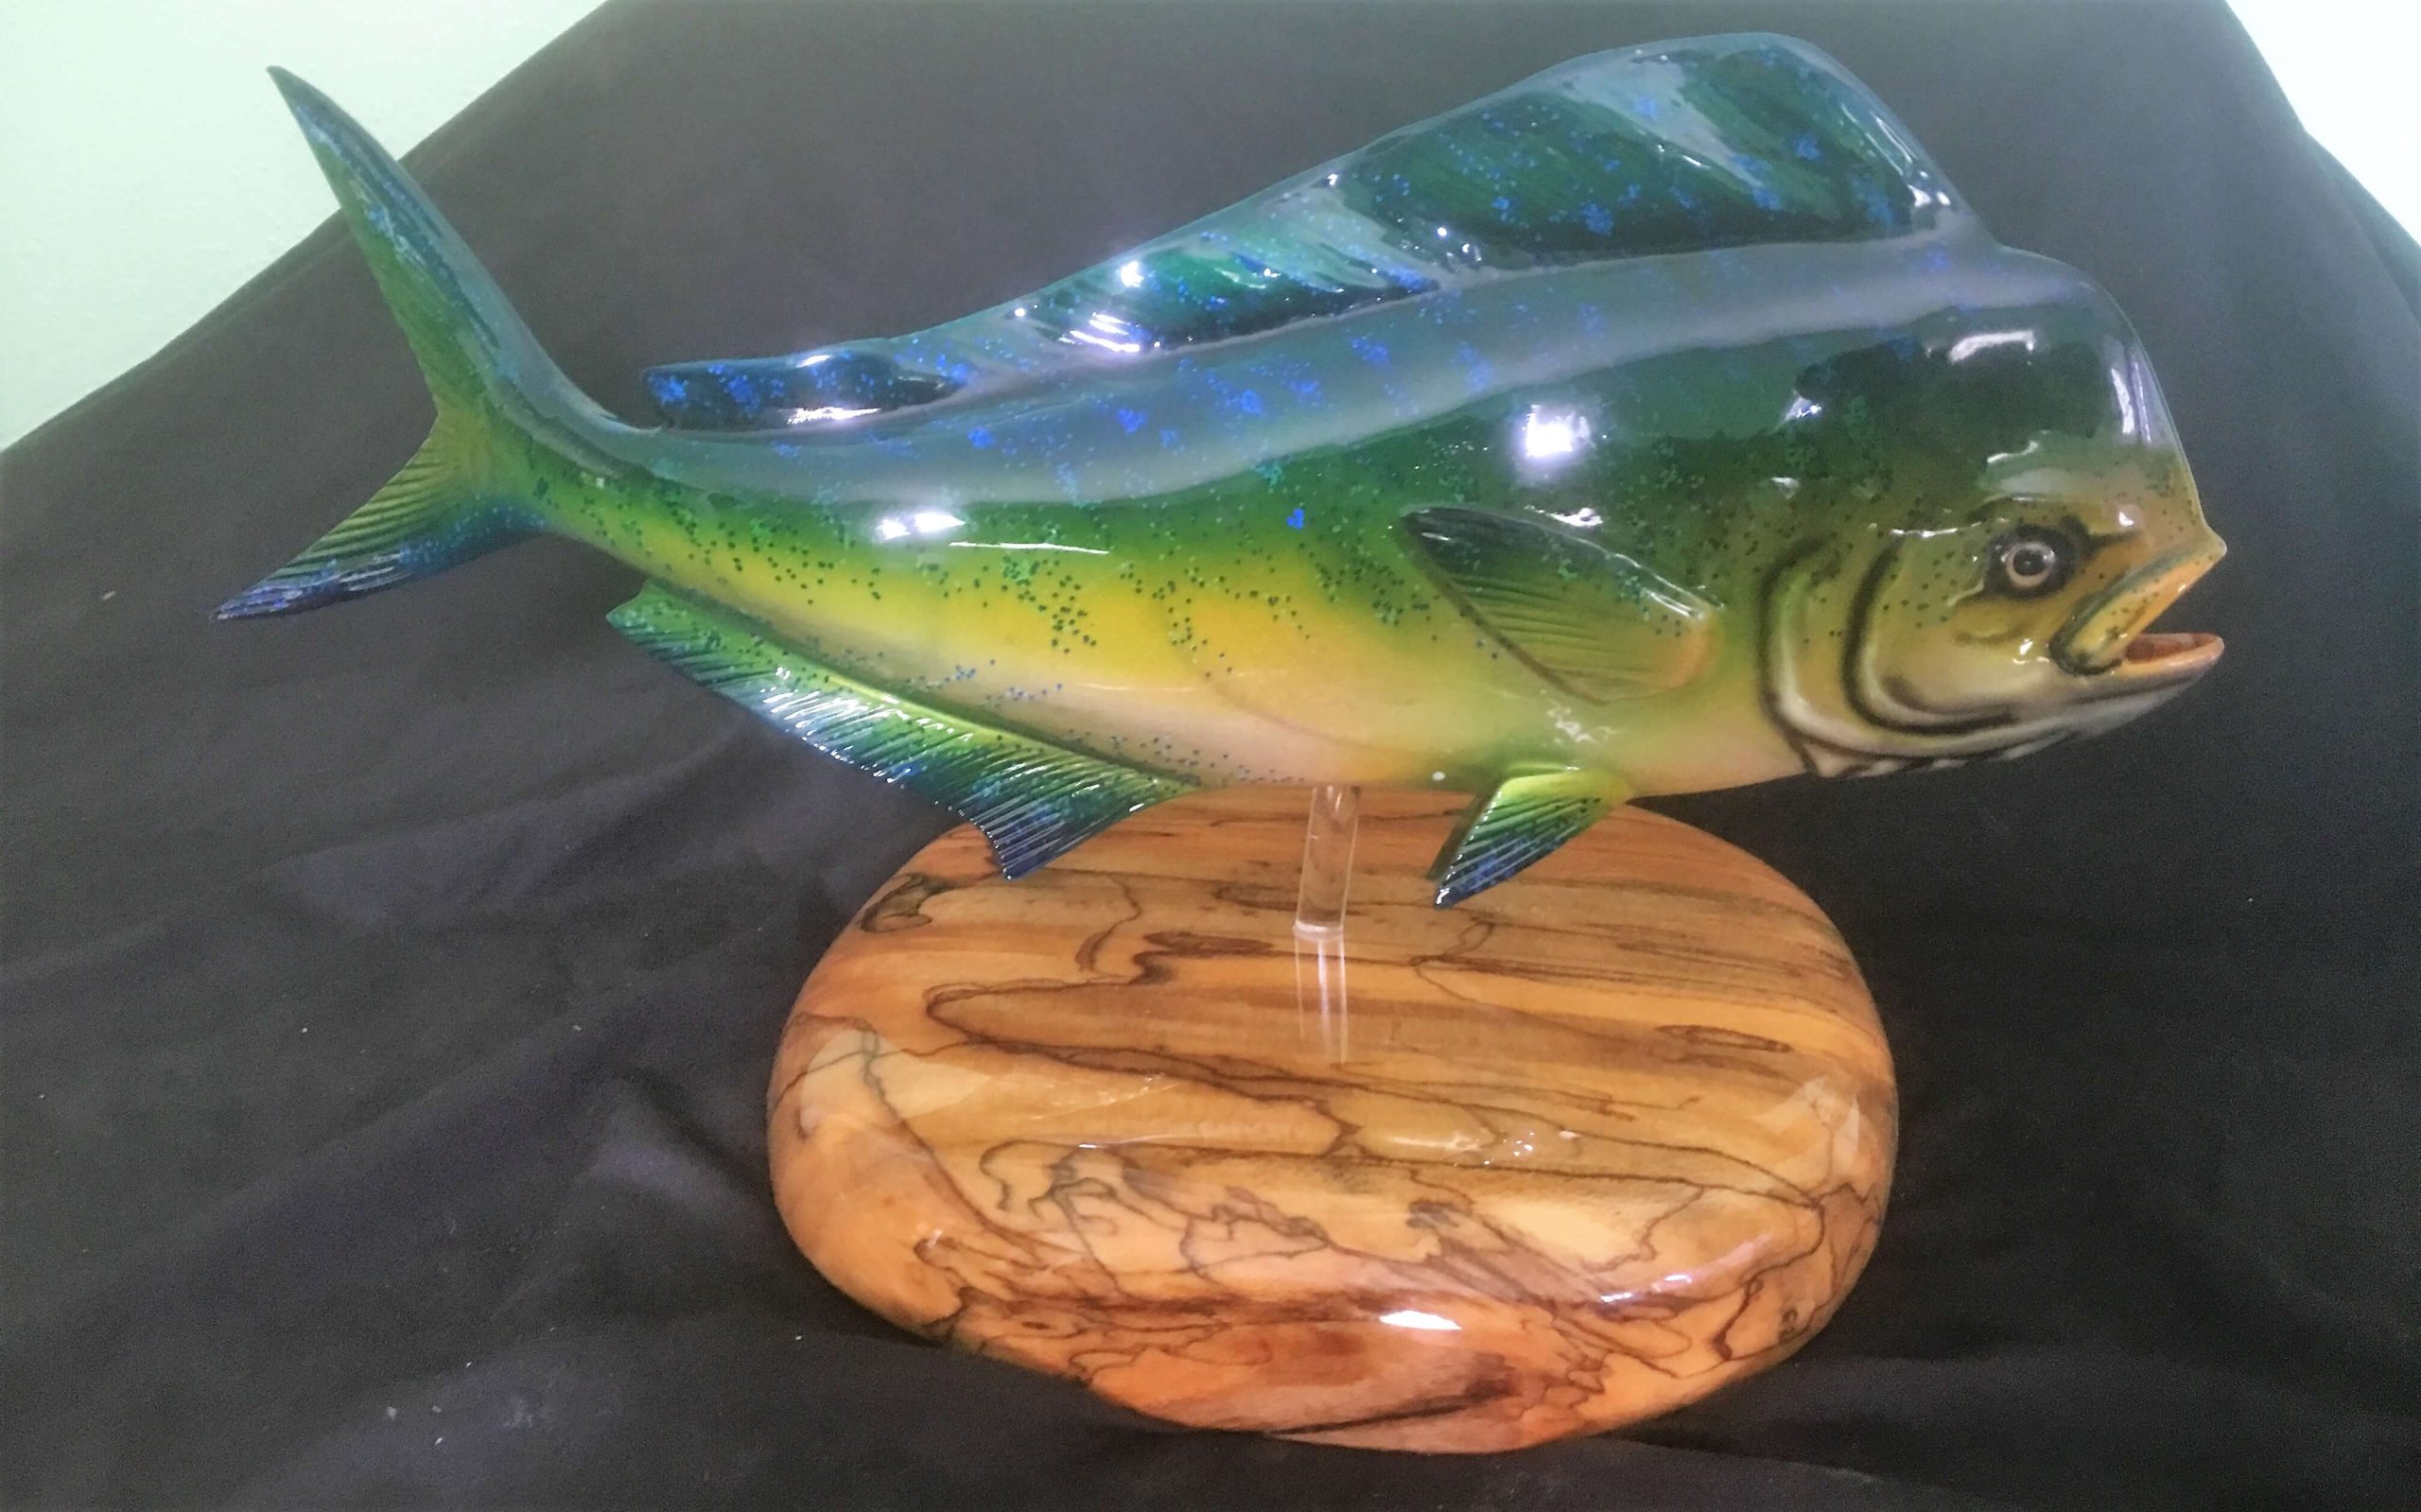 Full Mount Mahi/Dorado/Dolphin Fish Wood Trophy Carving/Sculpture